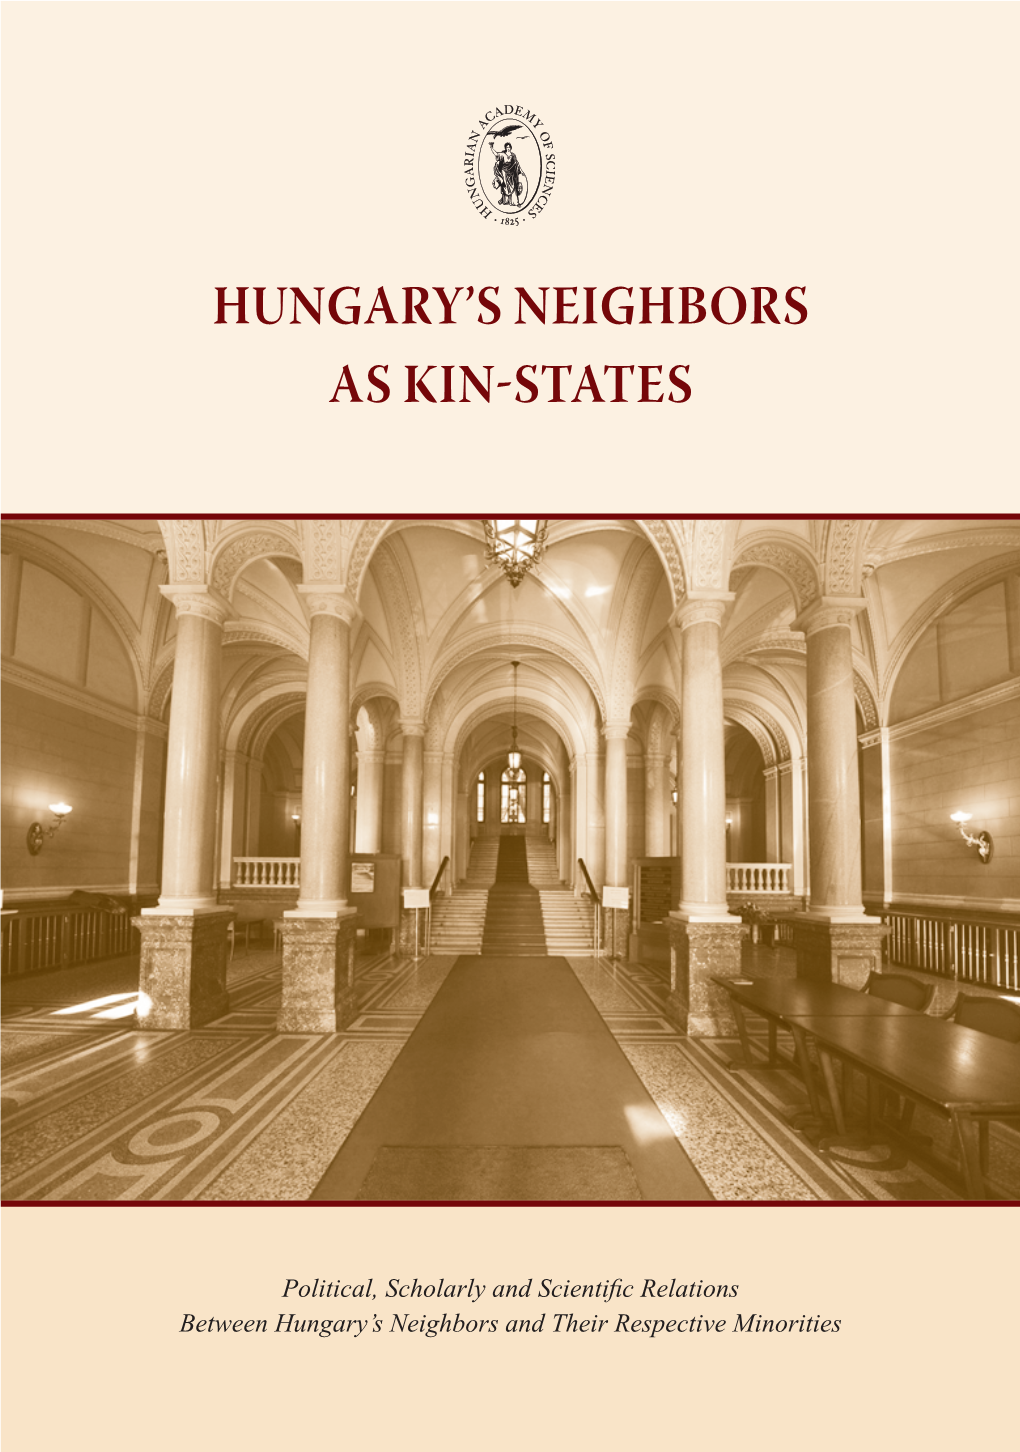 MTA-Hungary's Neighbors As Kin-States